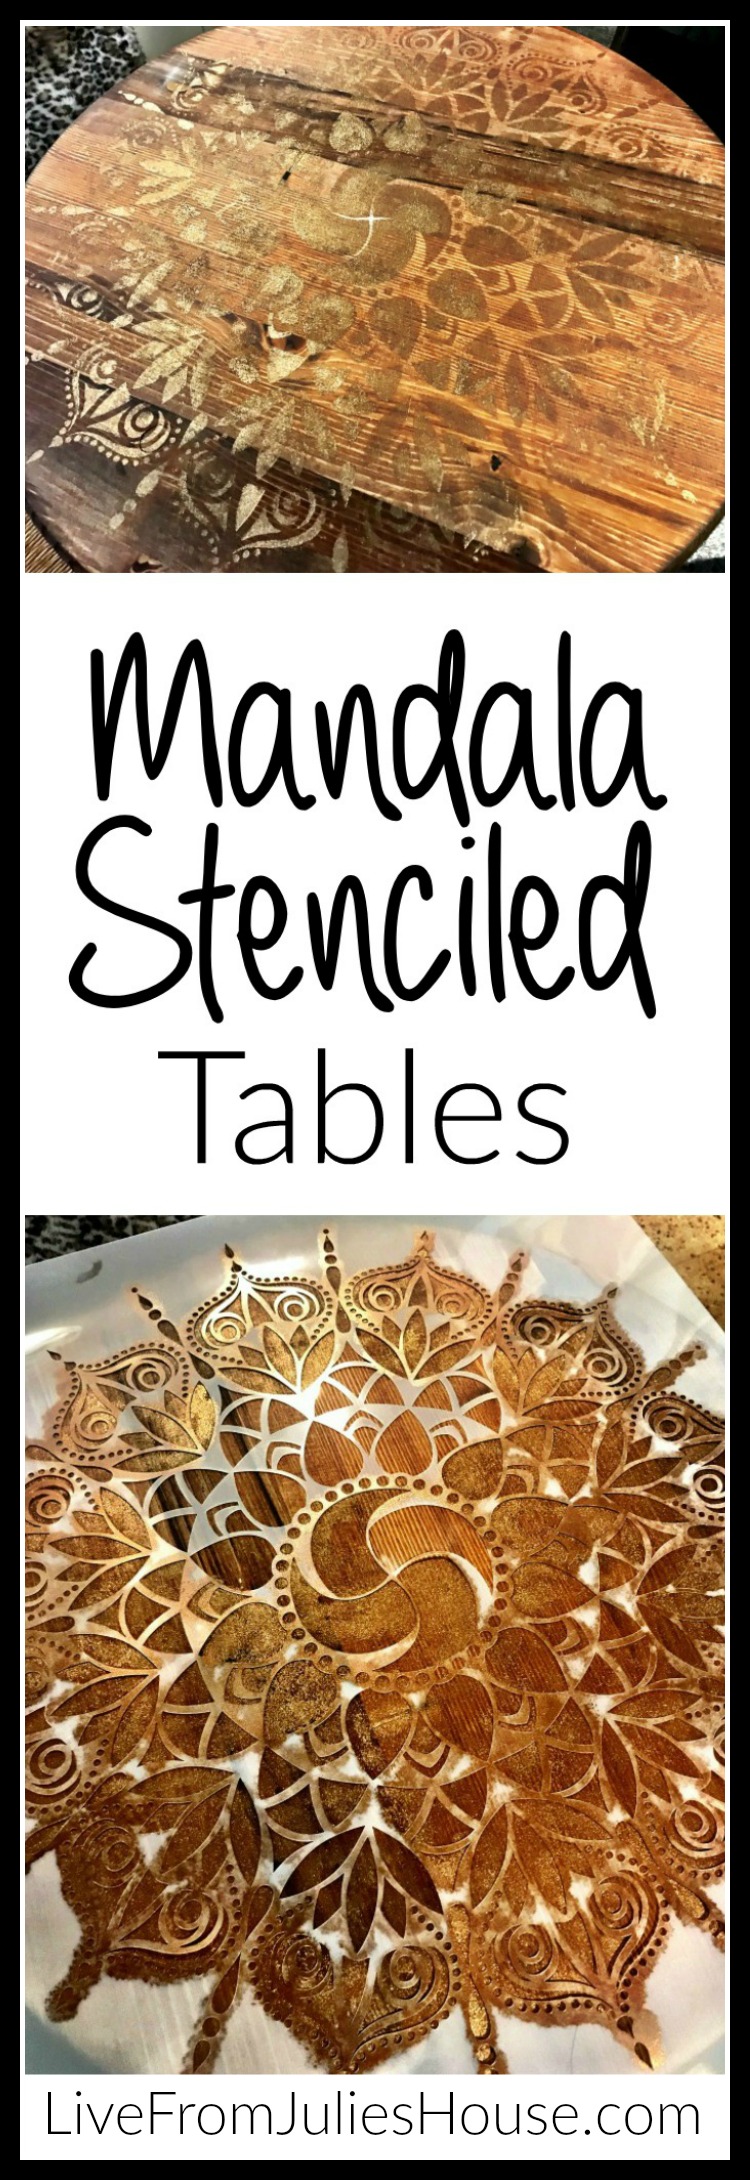 Mandala stenciled tables